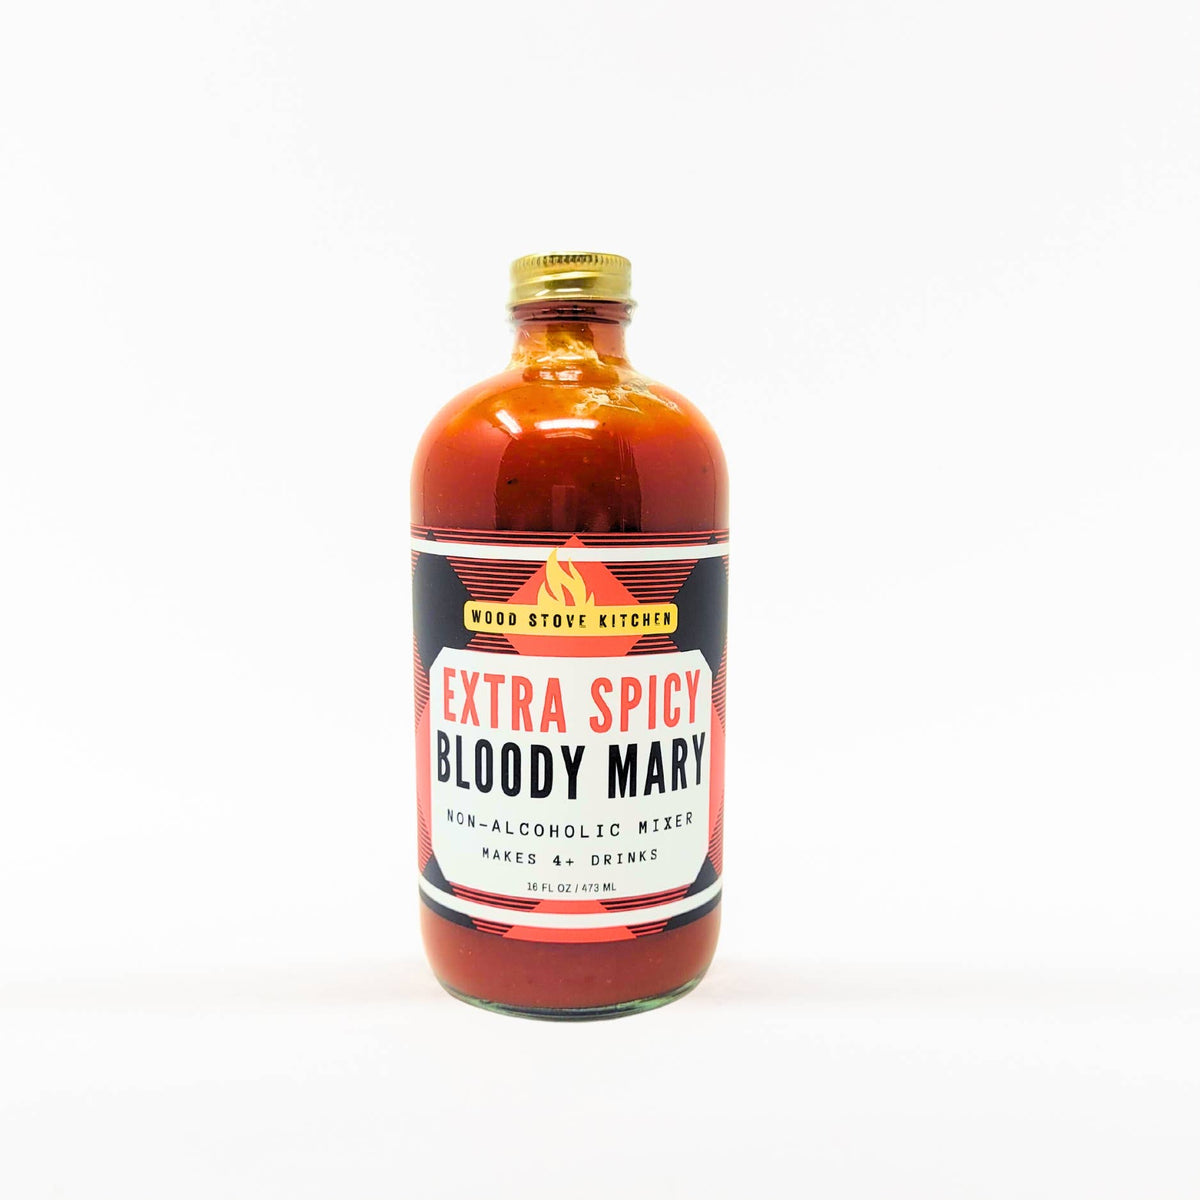 Extra Spicy Bloody Mary Mixer, 16 fl oz.